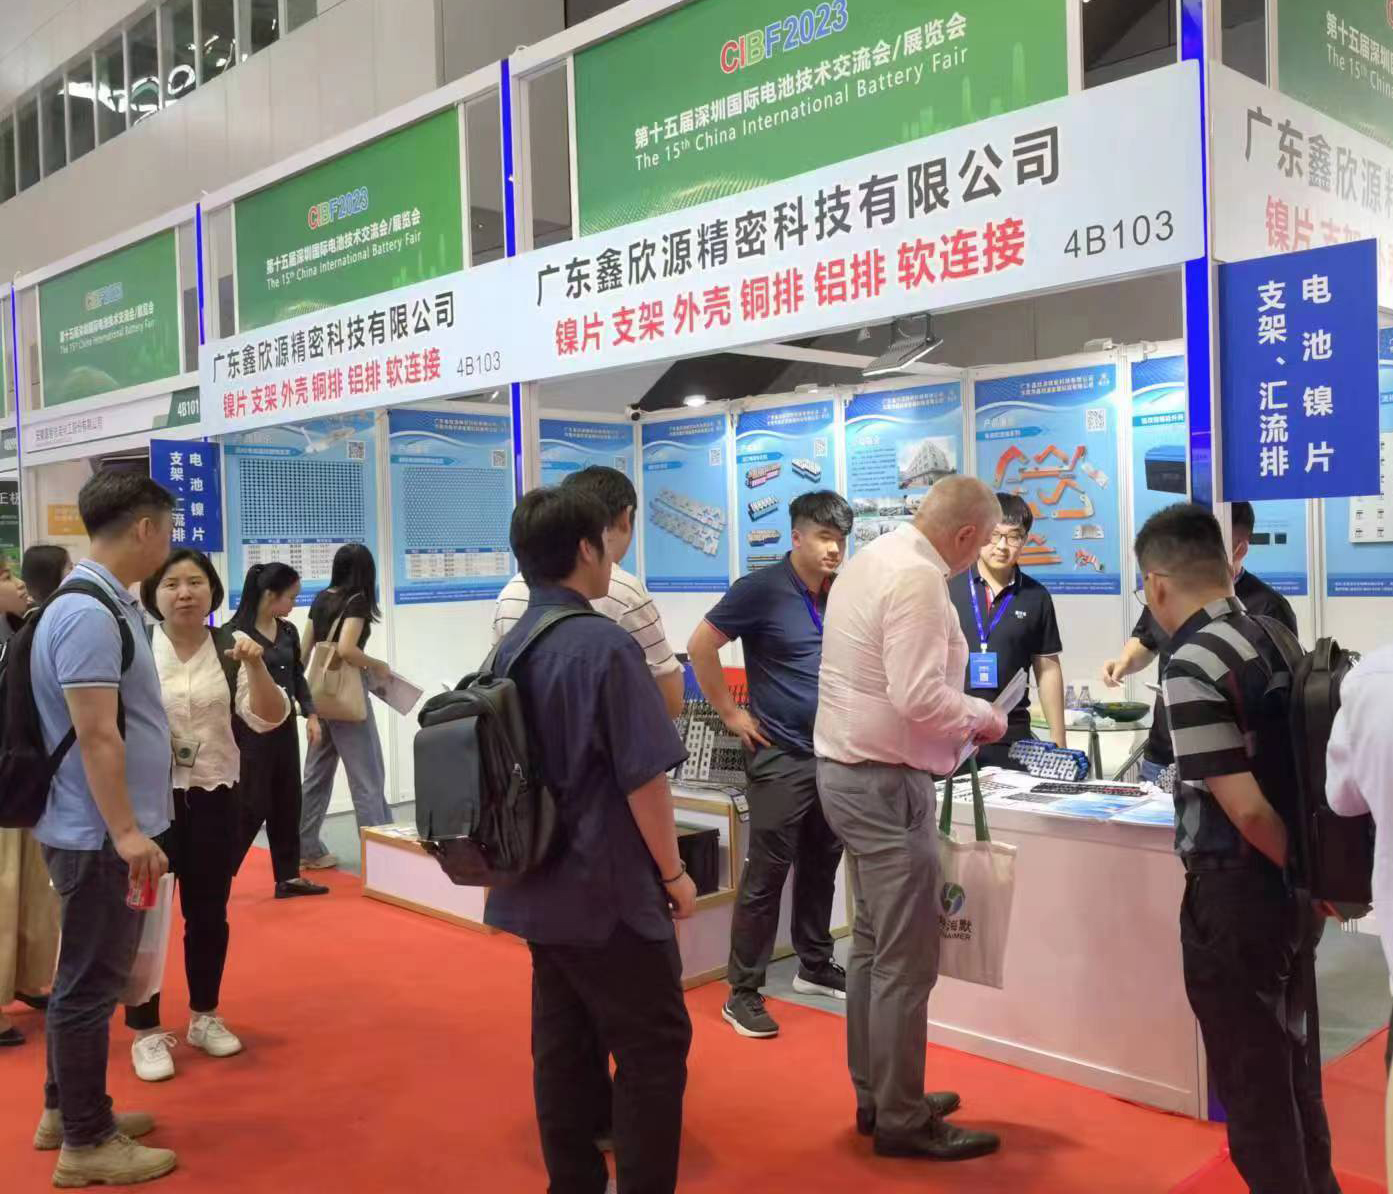 Exhibiton Review of CIBF2023-15th China International Battery Fair